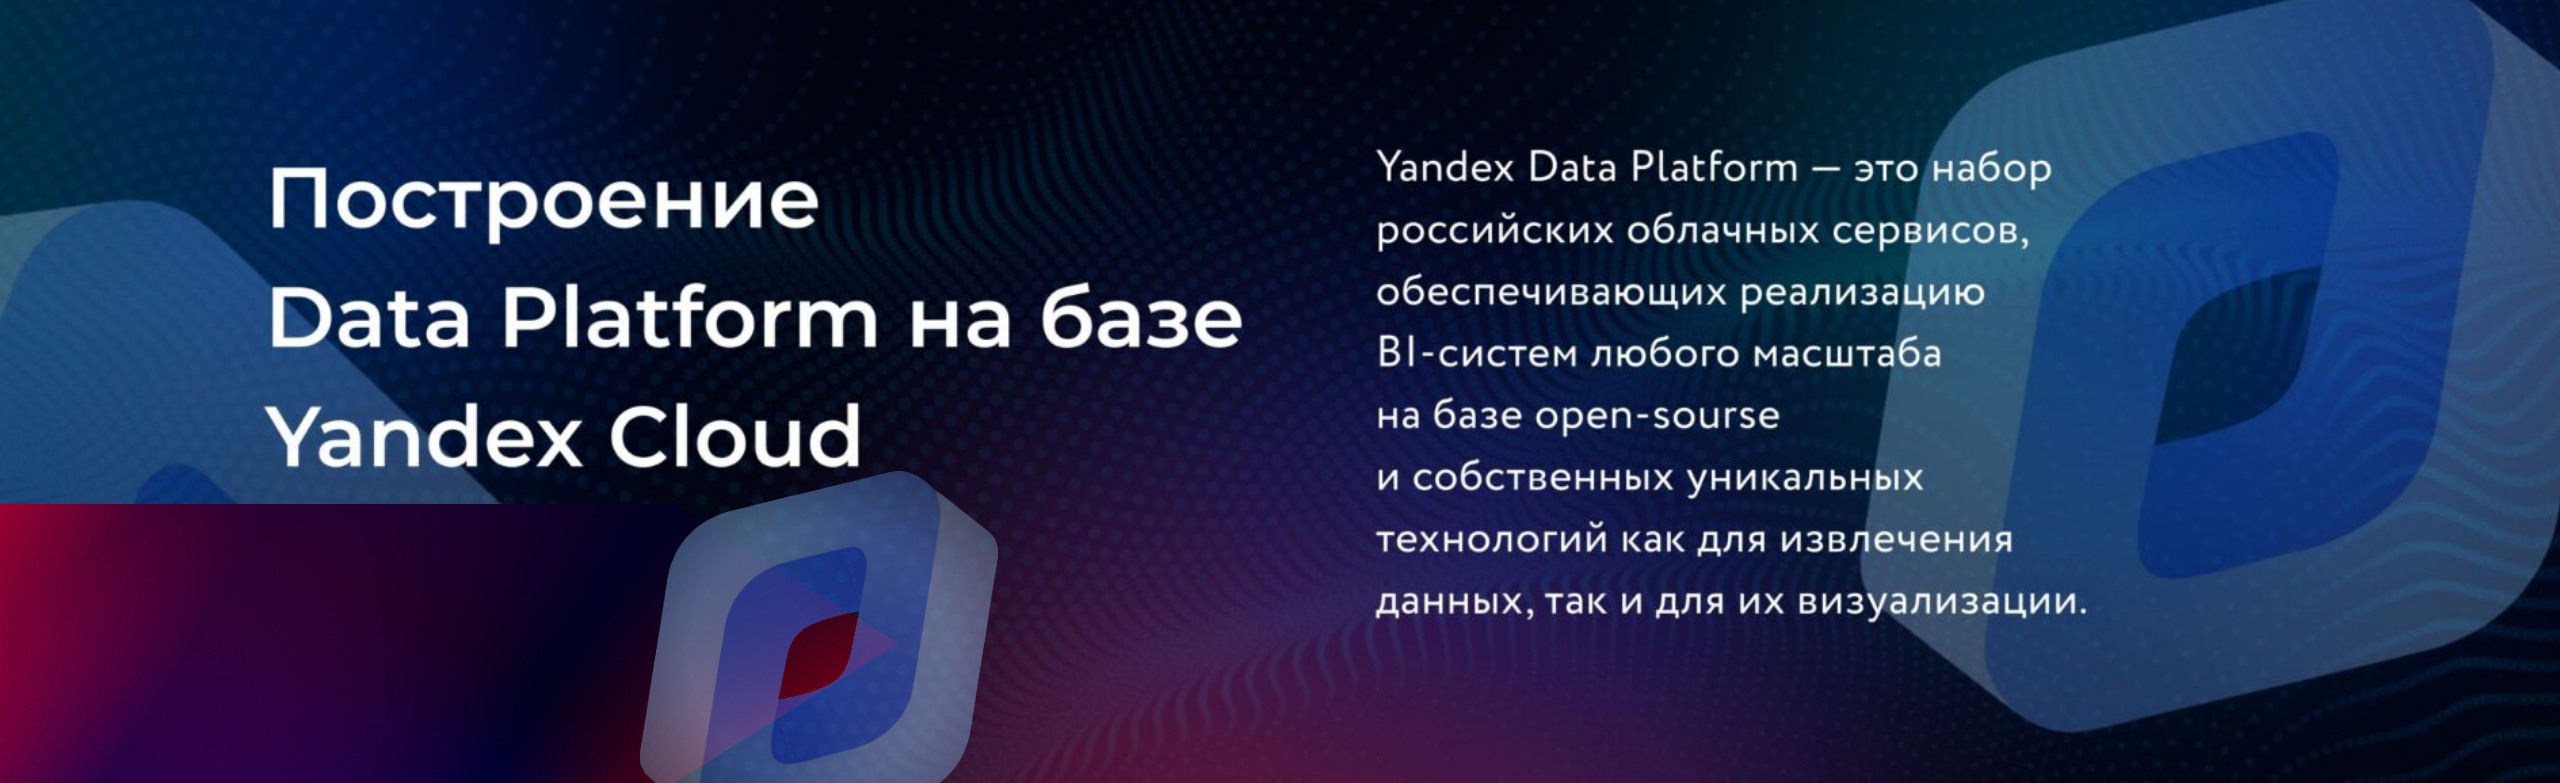 Yandex DataPlatform